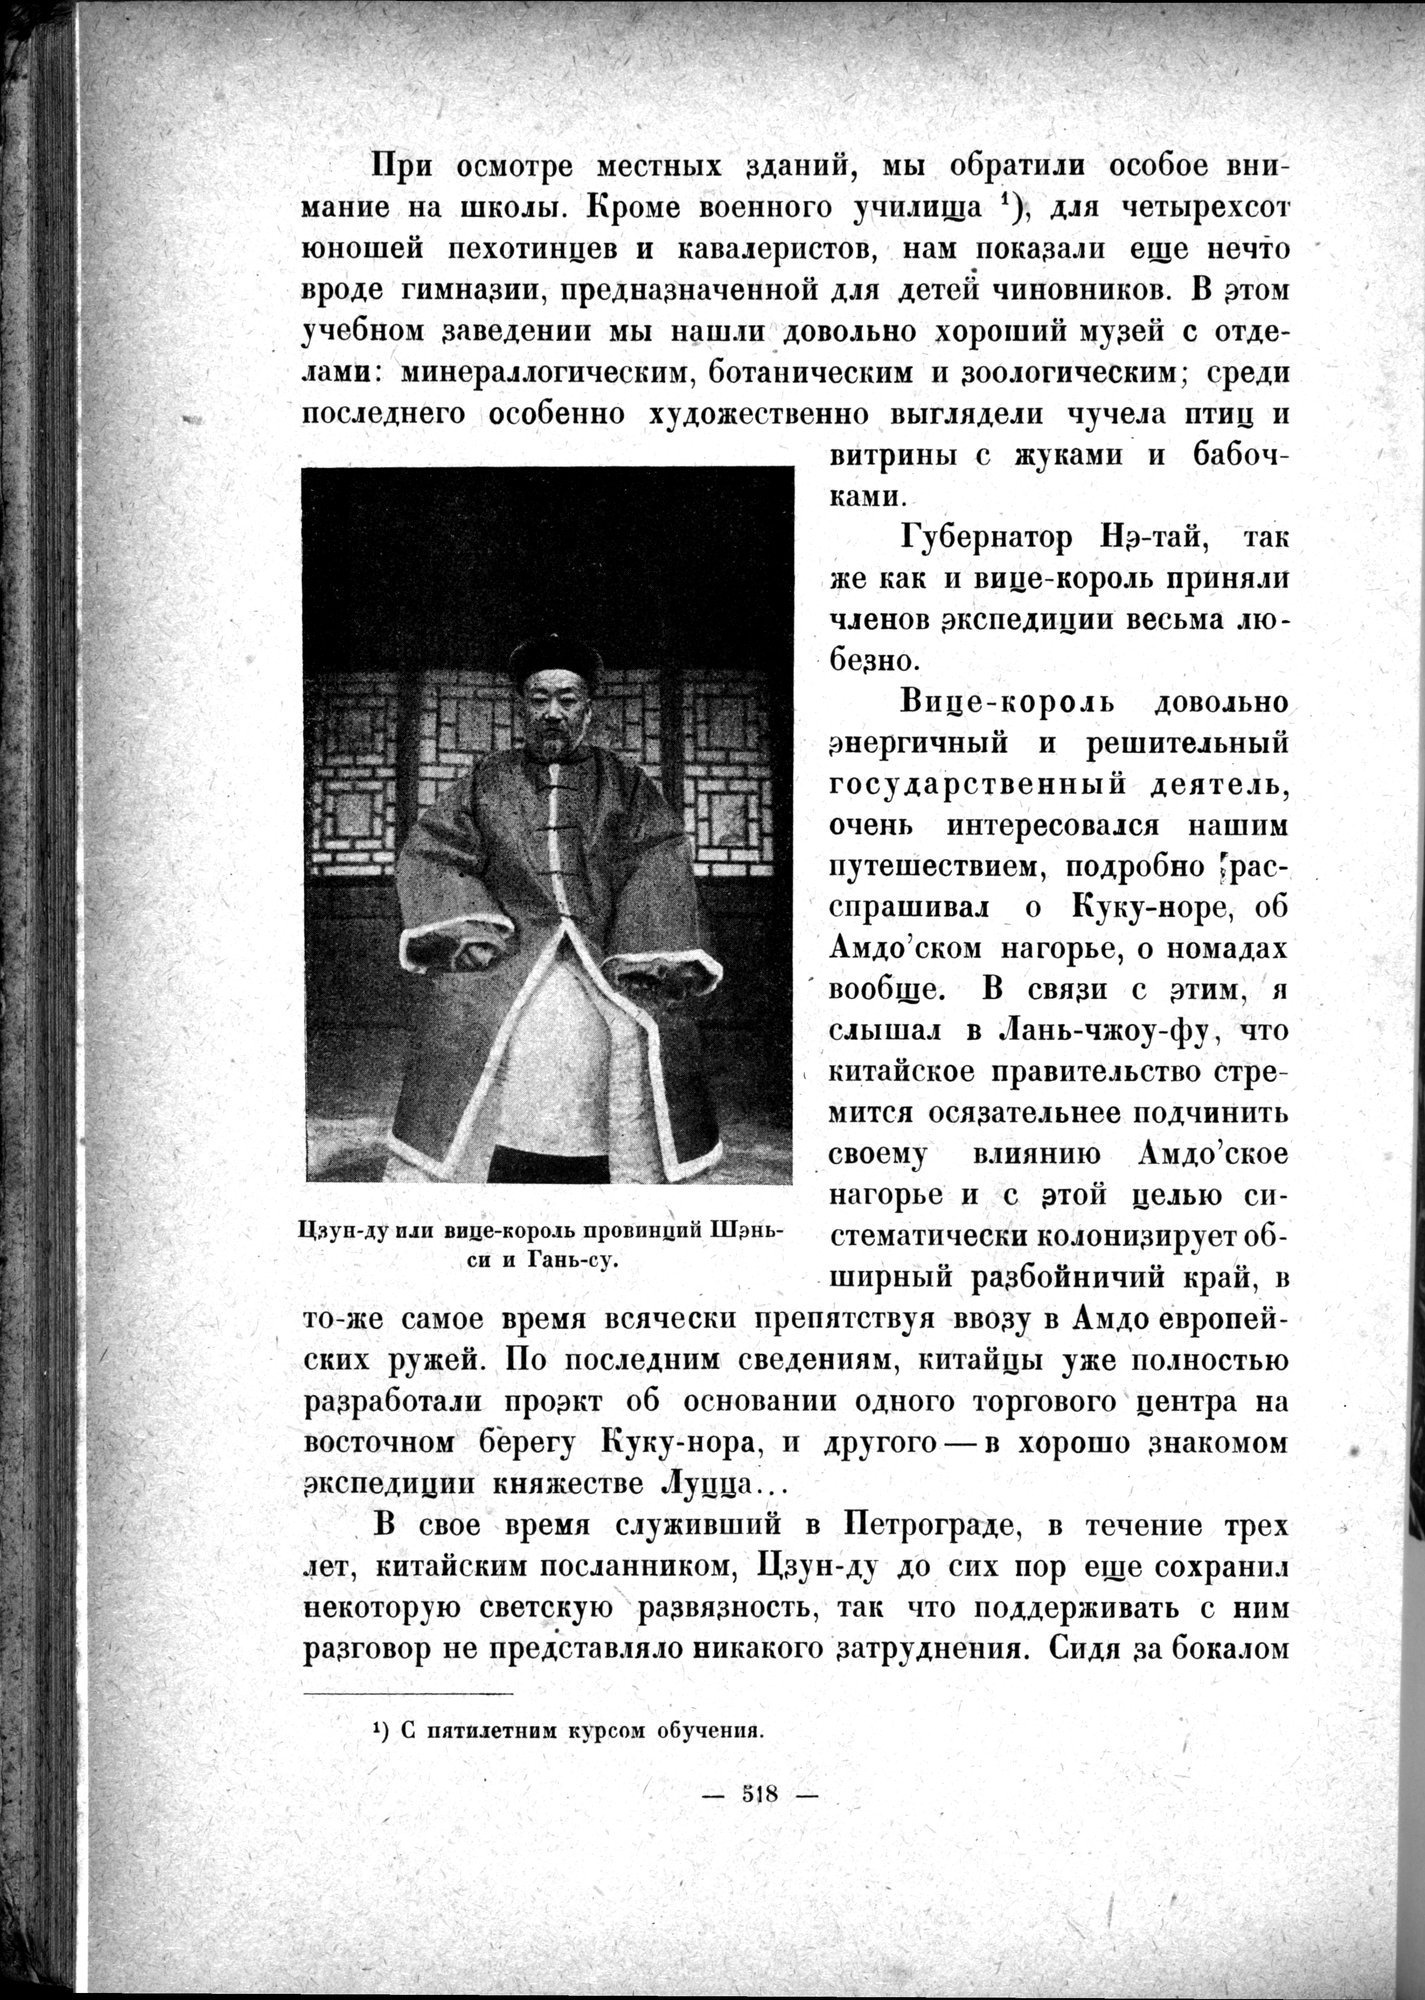 Mongoliya i Amdo i mertby gorod Khara-Khoto : vol.1 / Page 598 (Grayscale High Resolution Image)